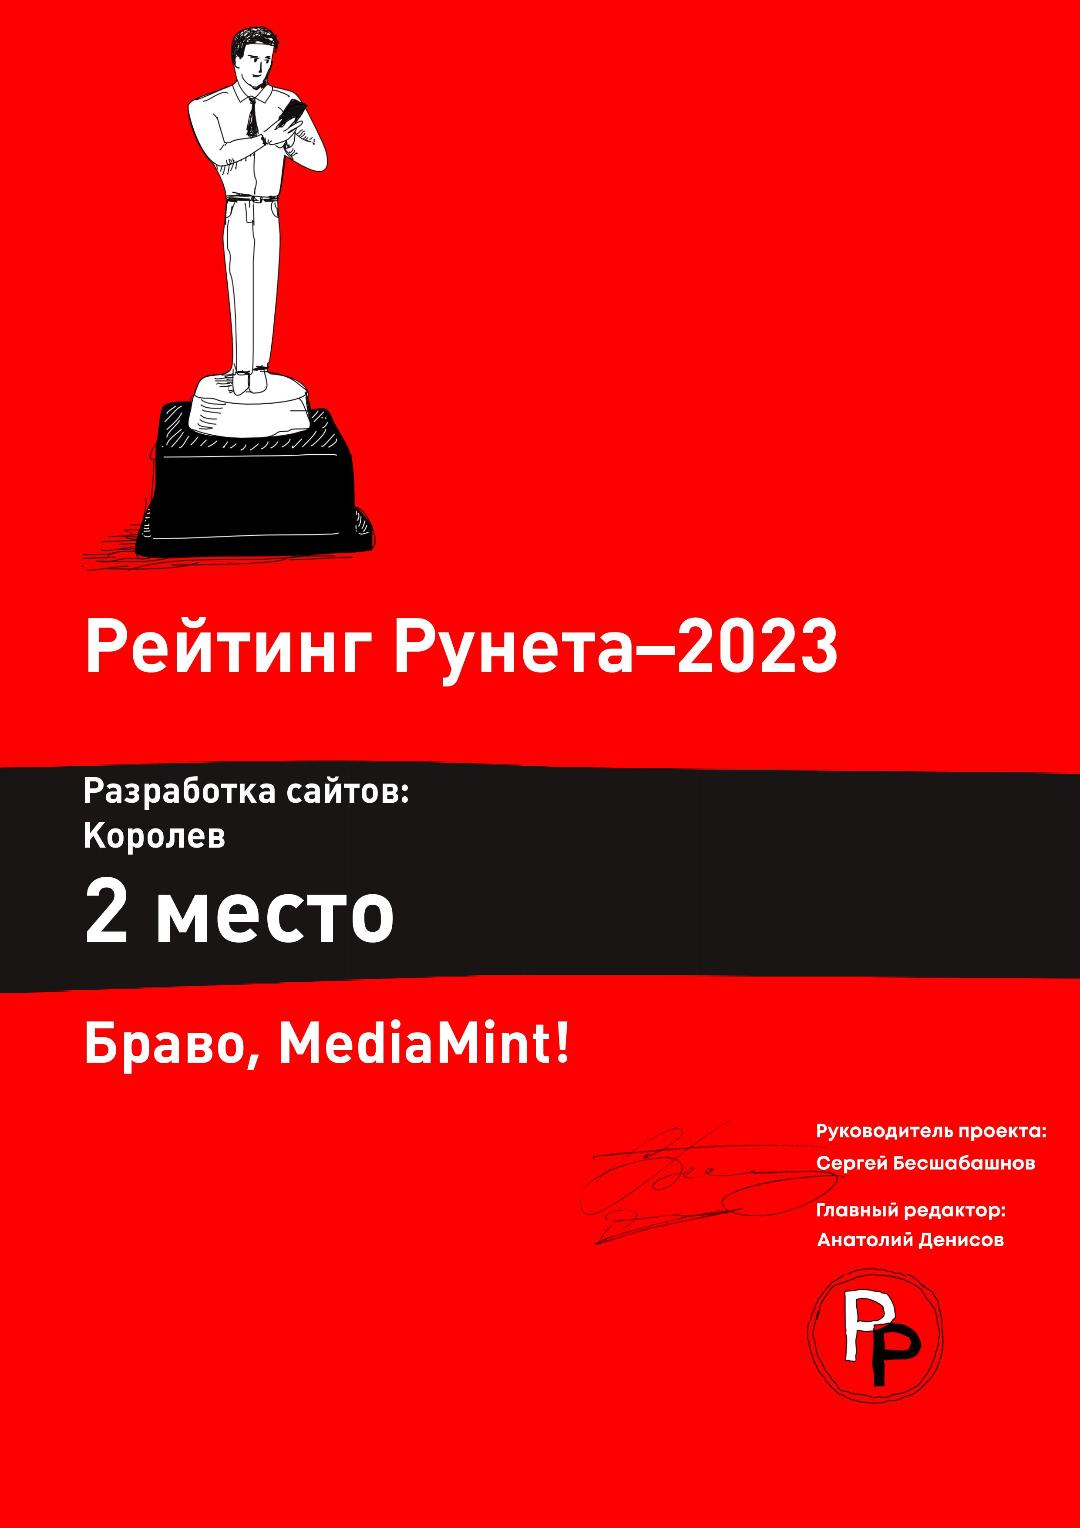 Рейтинг Рунета 2023